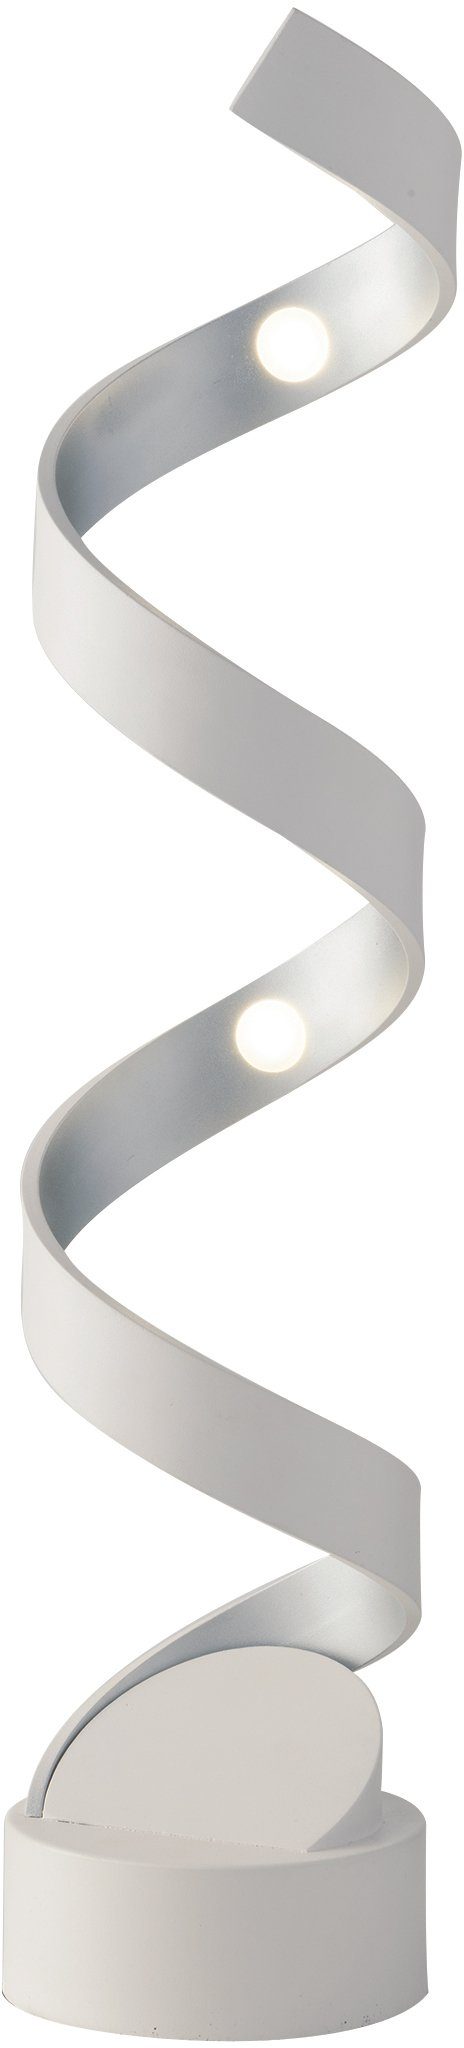 LUCE Design LED Tischleuchte HELIX, LED fest integriert, Warmweiß